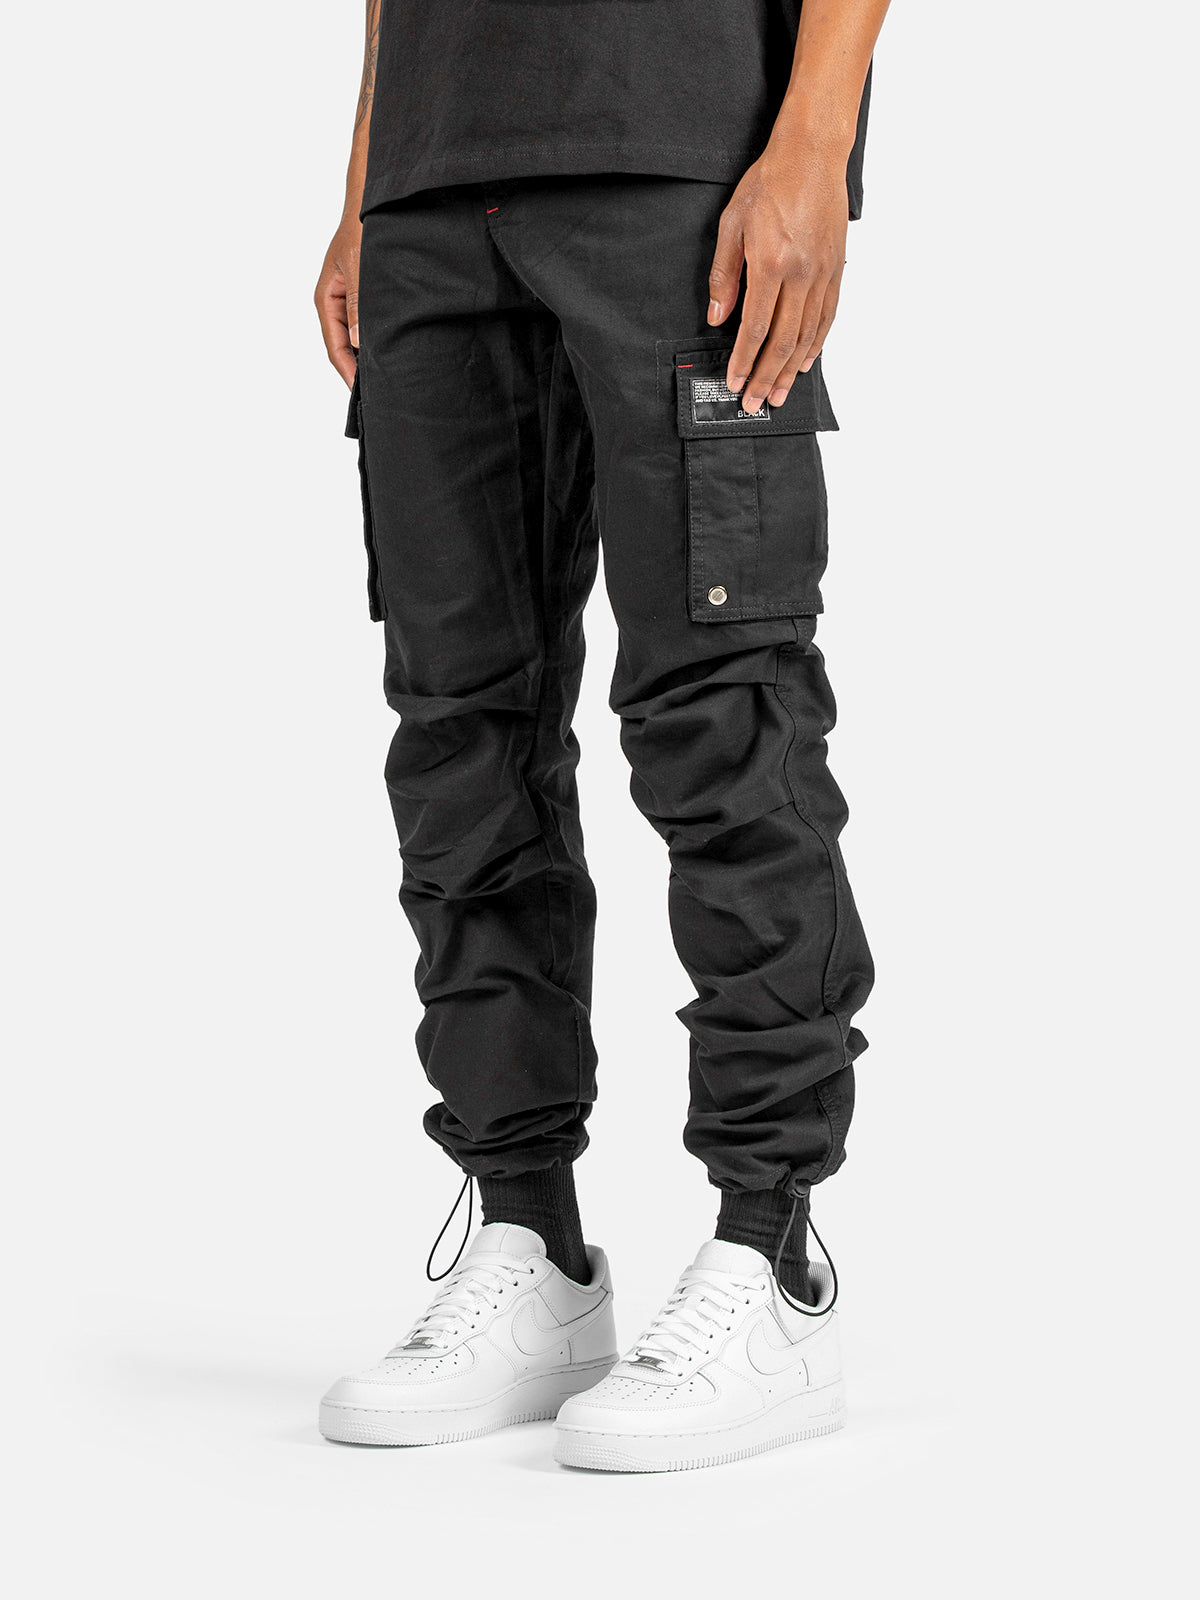 Cargo Pants Men Hip Hop Streetwear Jogger Pant Multi-Pocket Casual Trousers  Pant | eBay